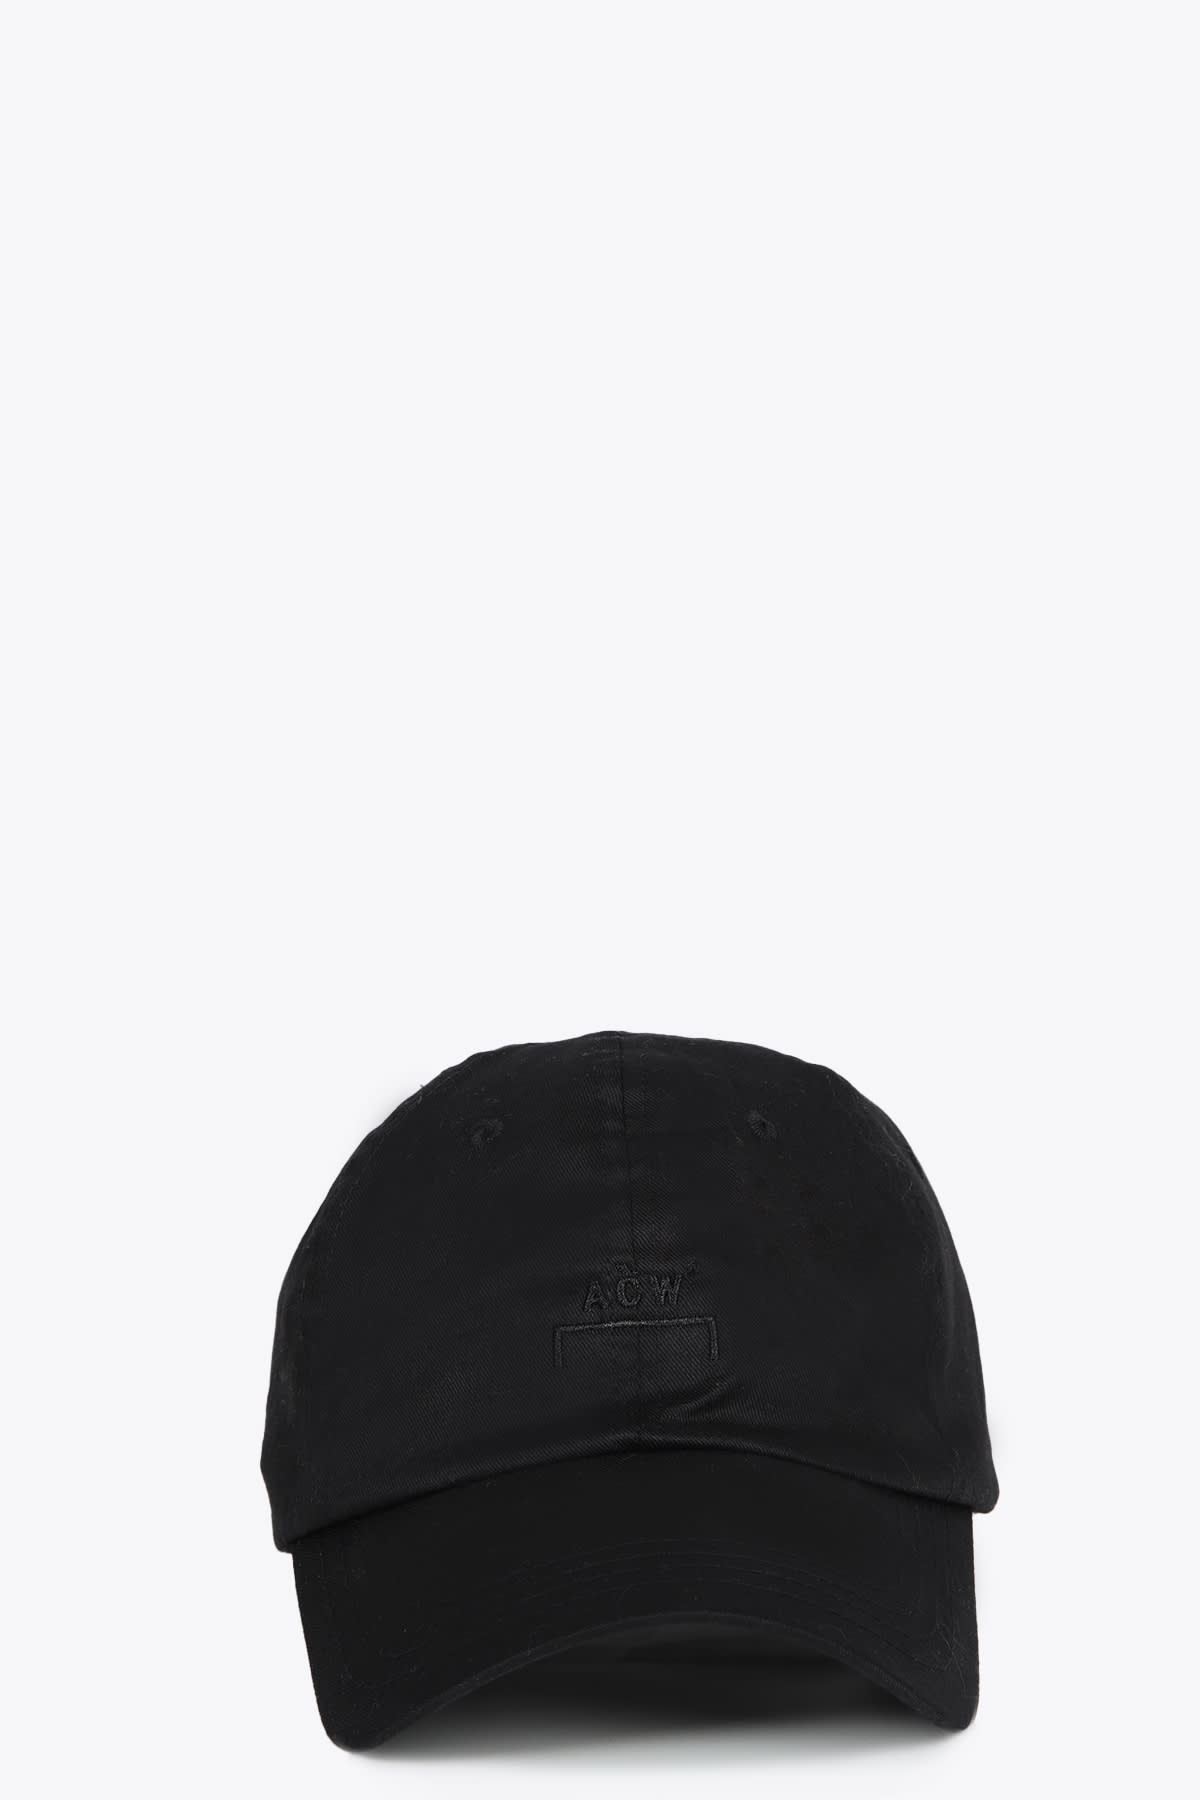 A-COLD-WALL Bracket Cap Black cotton cap with logo - Bracket Cap